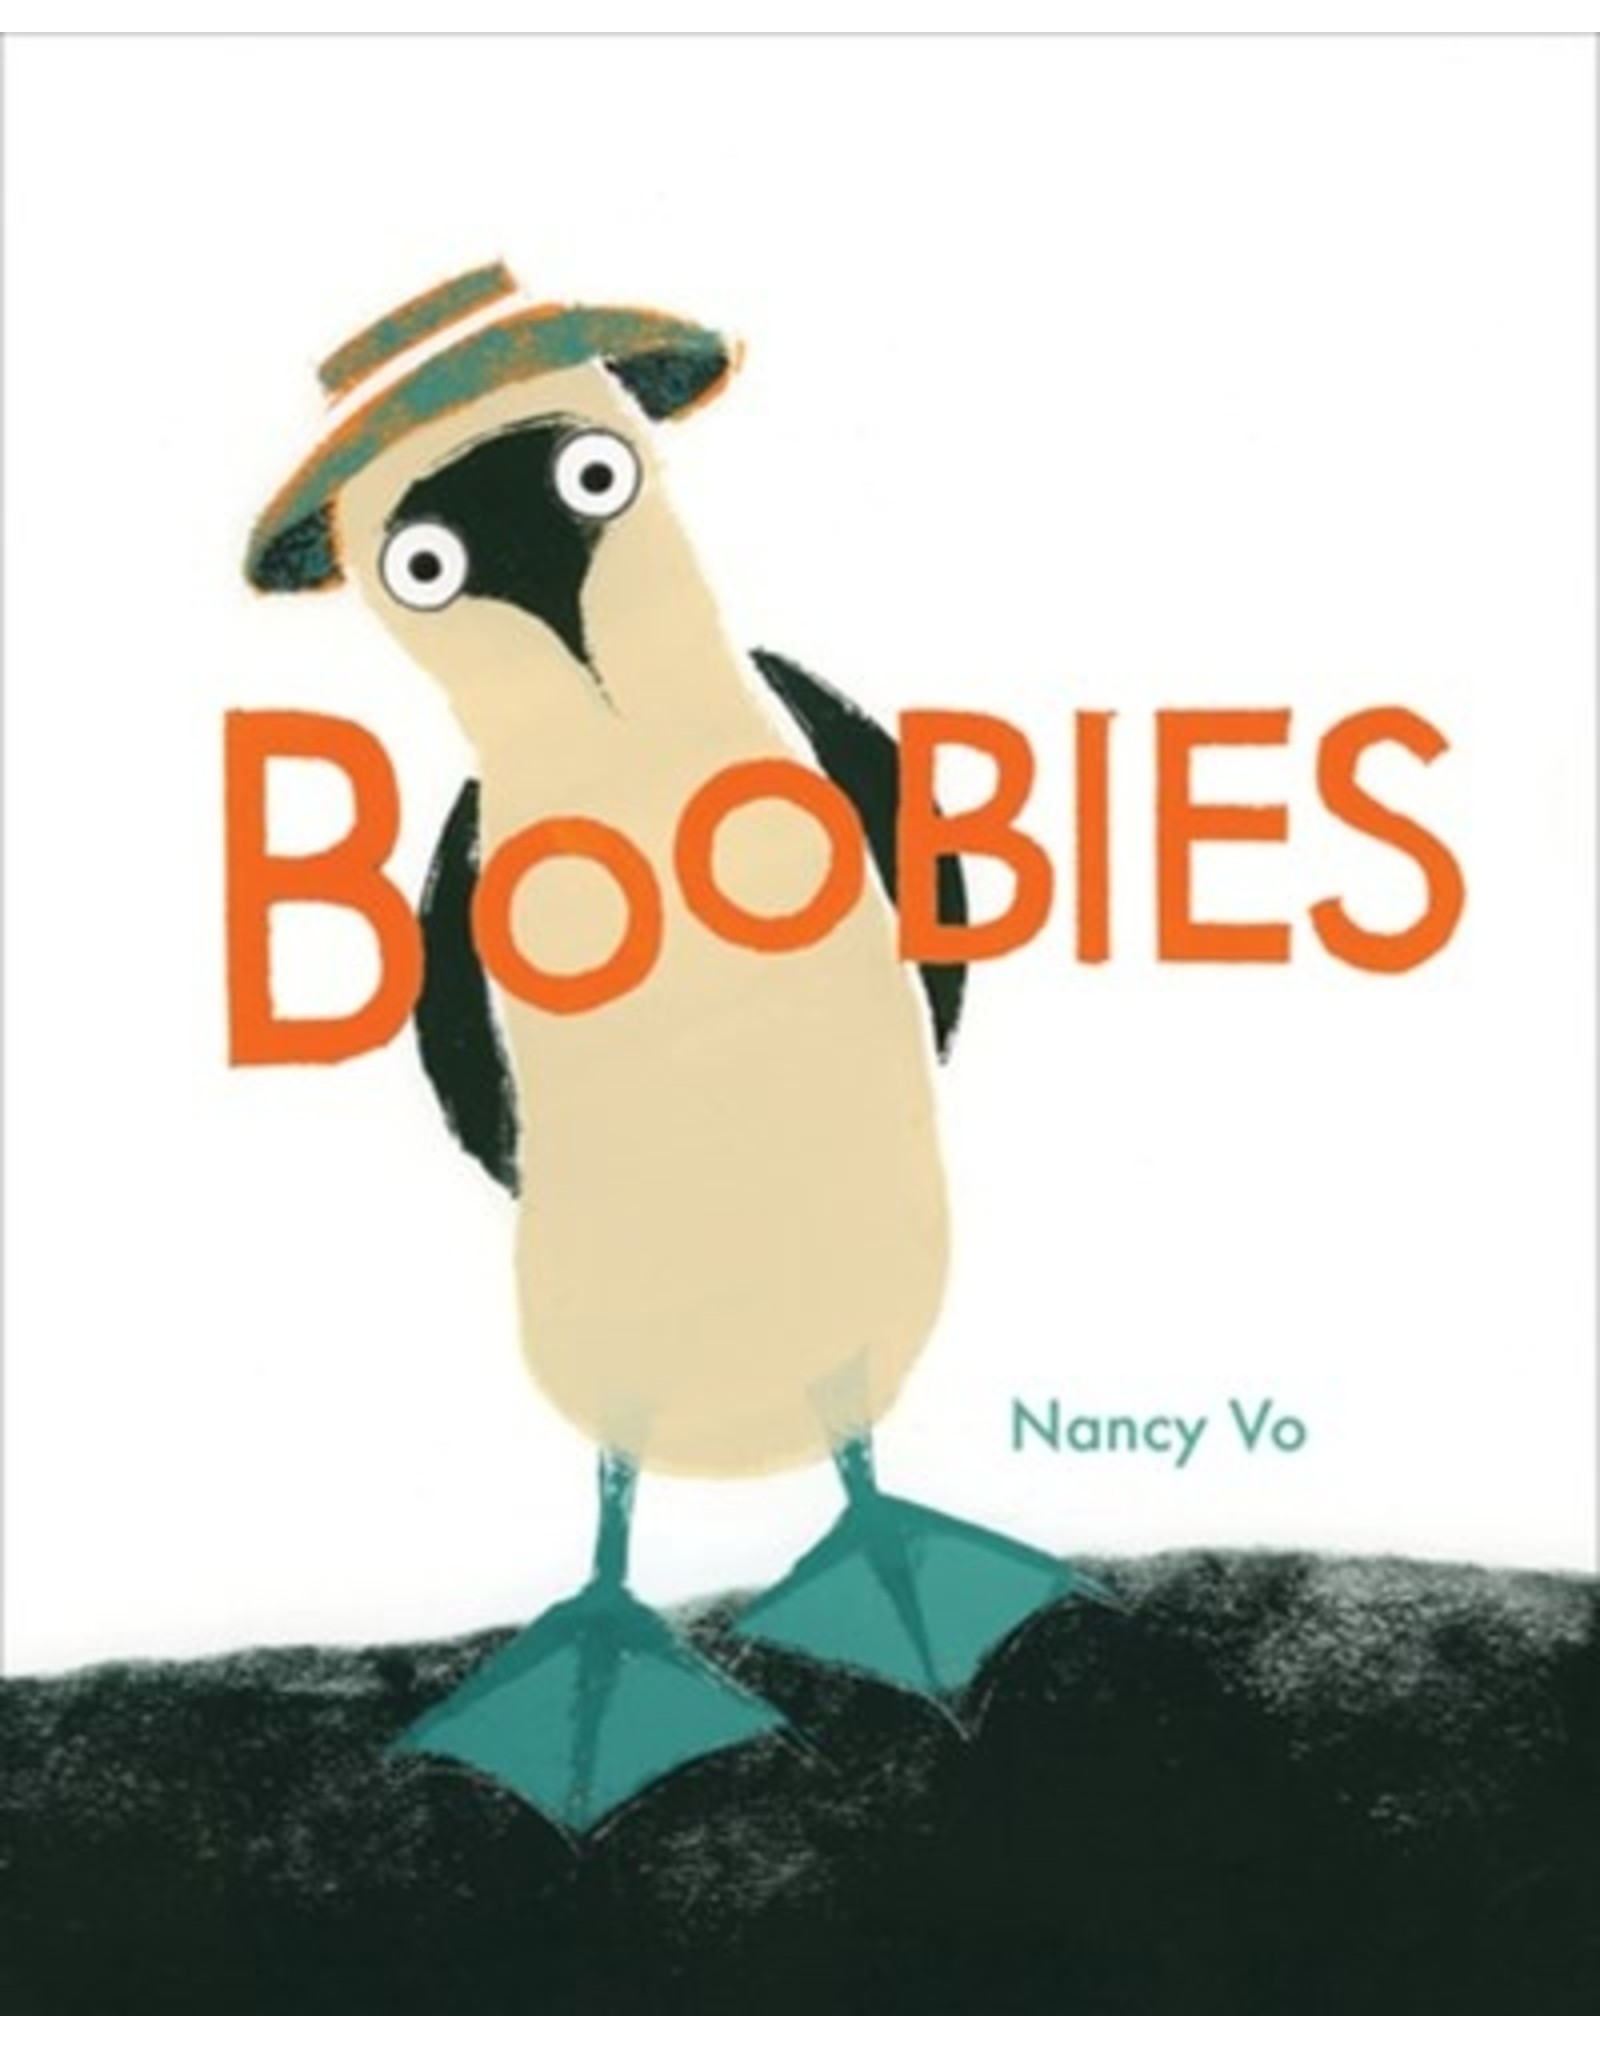 Books Boobies by Nancy Vo